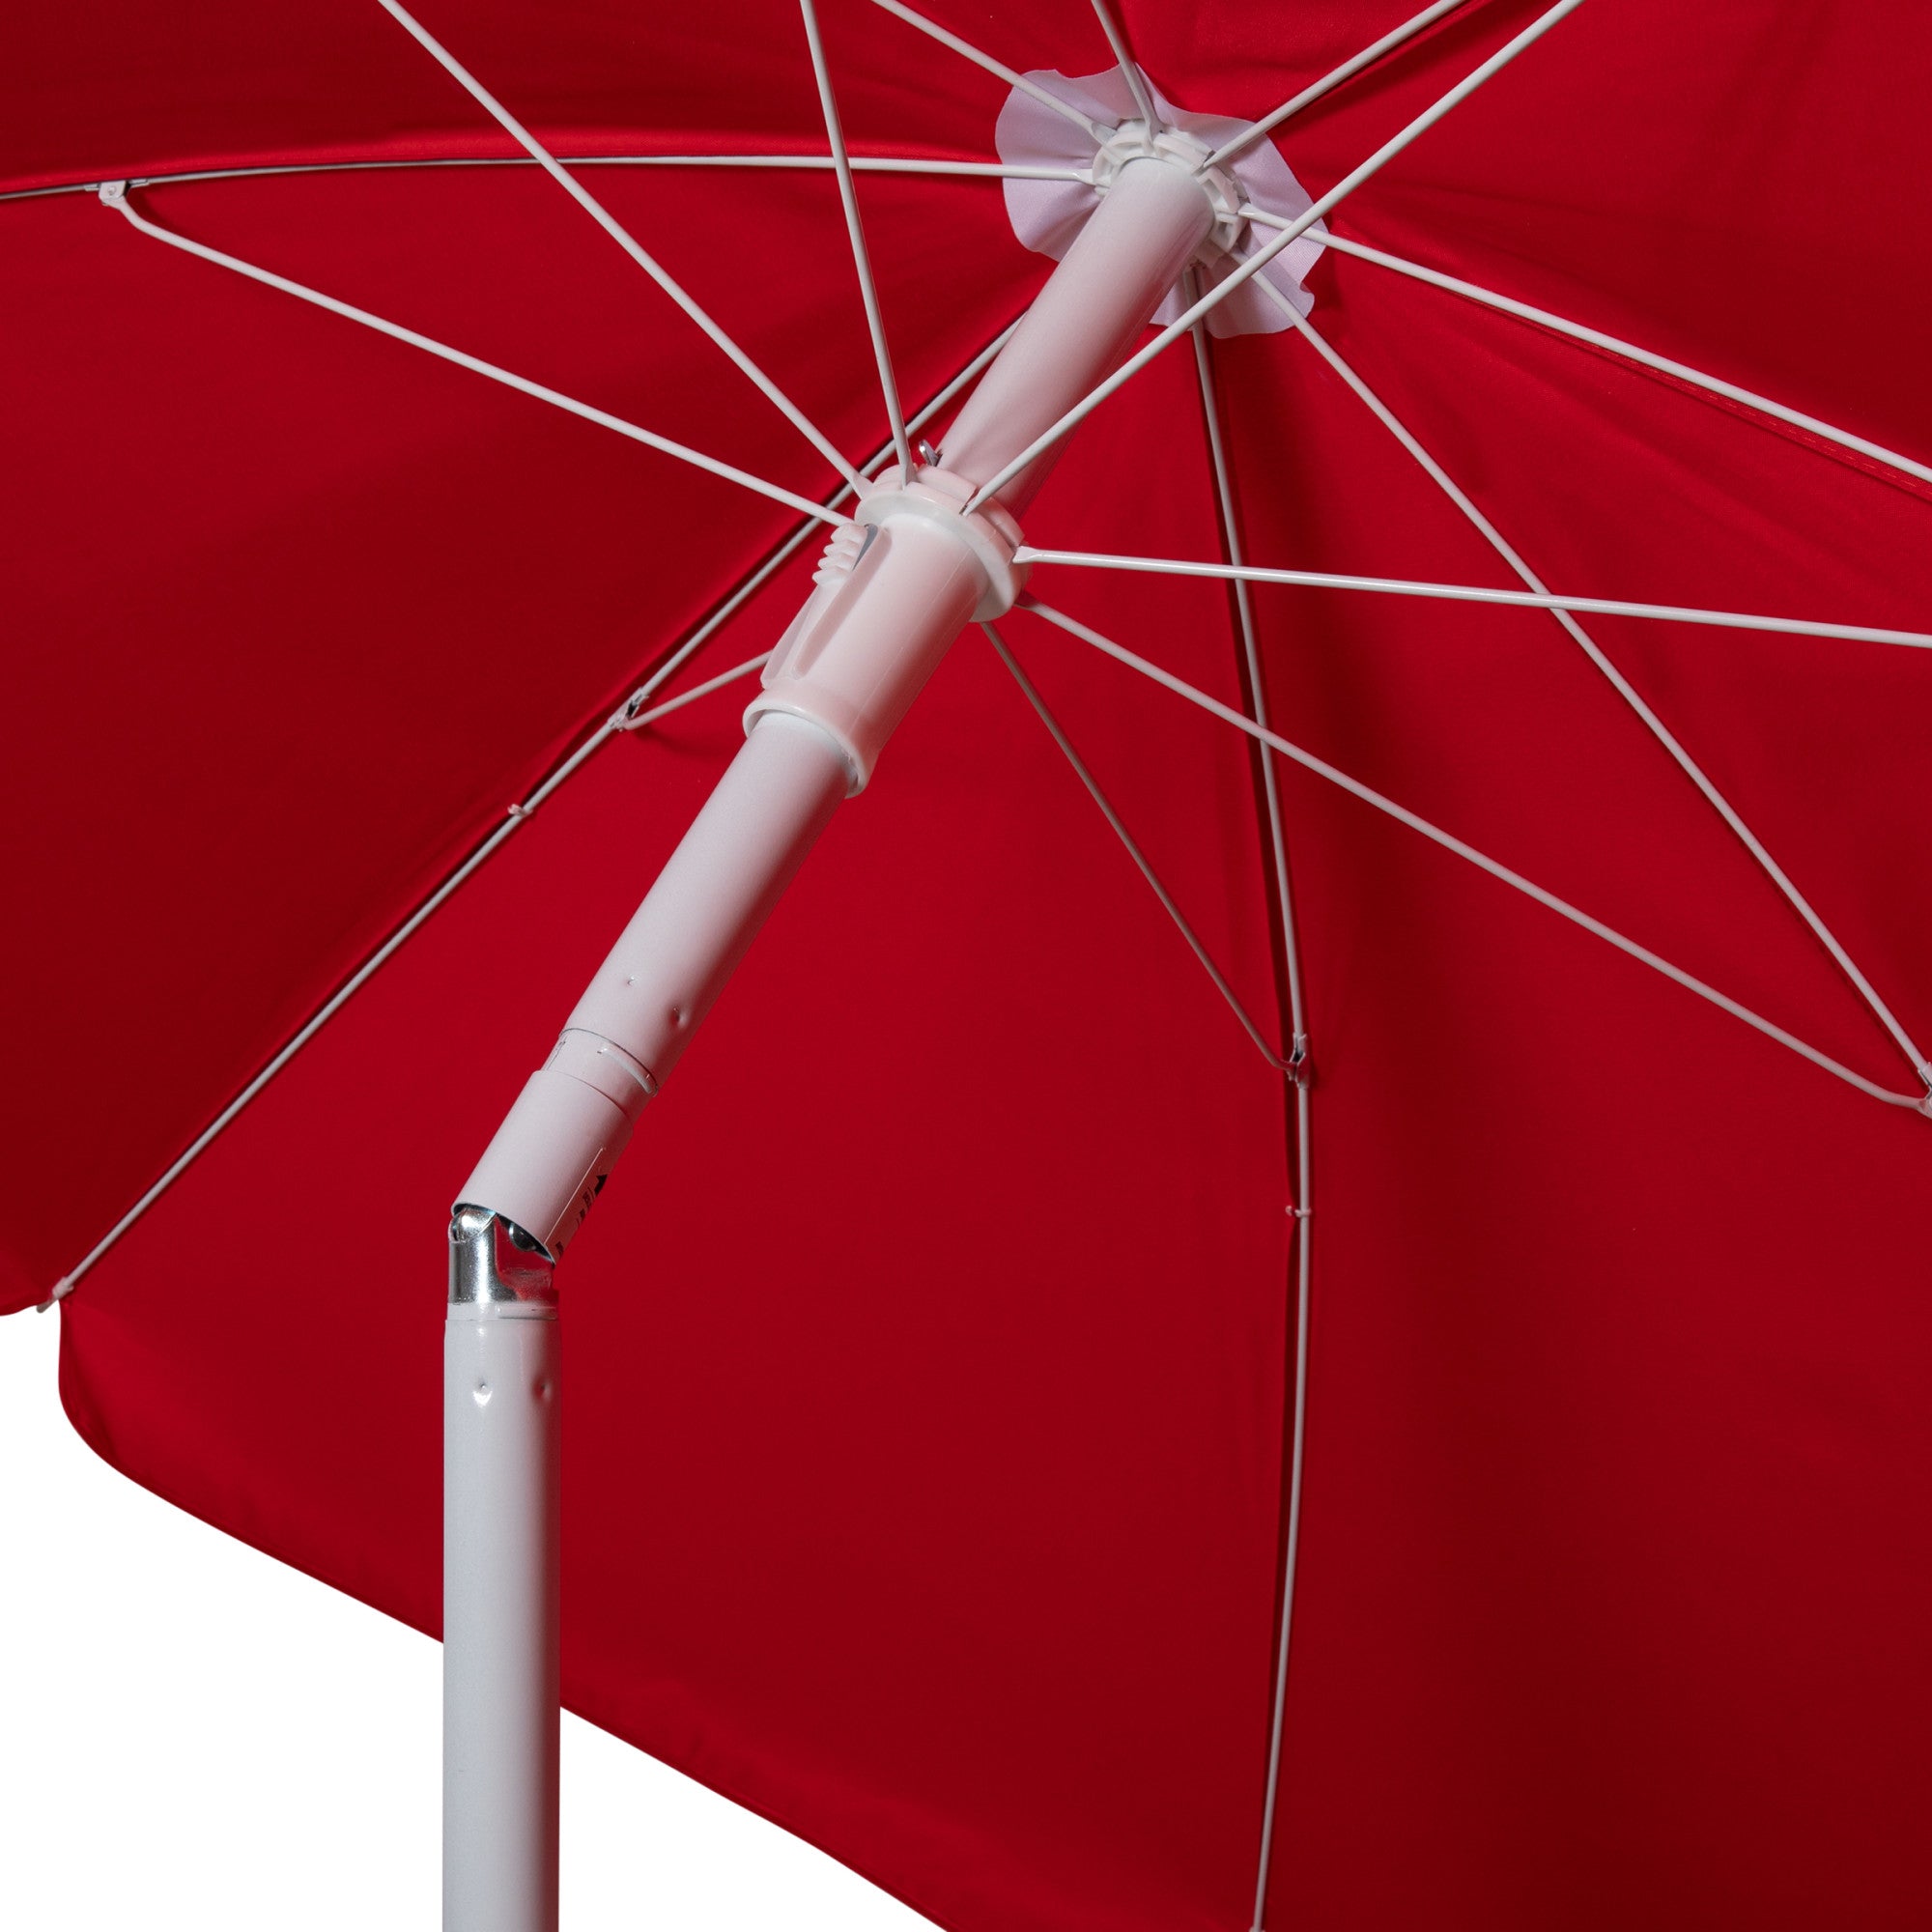 Ohio State Buckeyes - 5.5 Ft. Portable Beach Umbrella